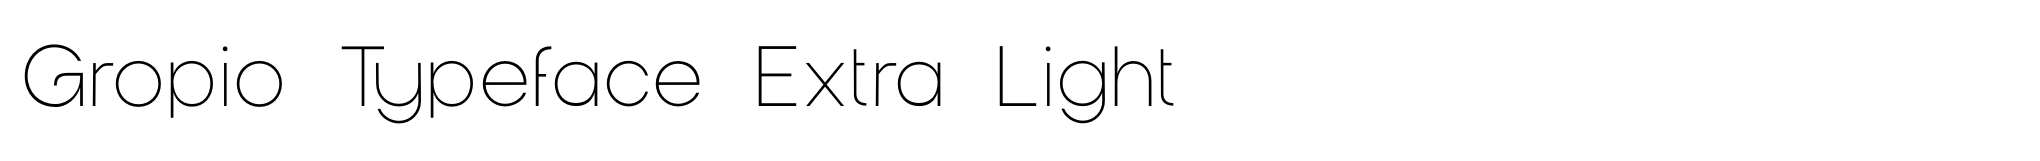 Gropio Typeface Extra Light image